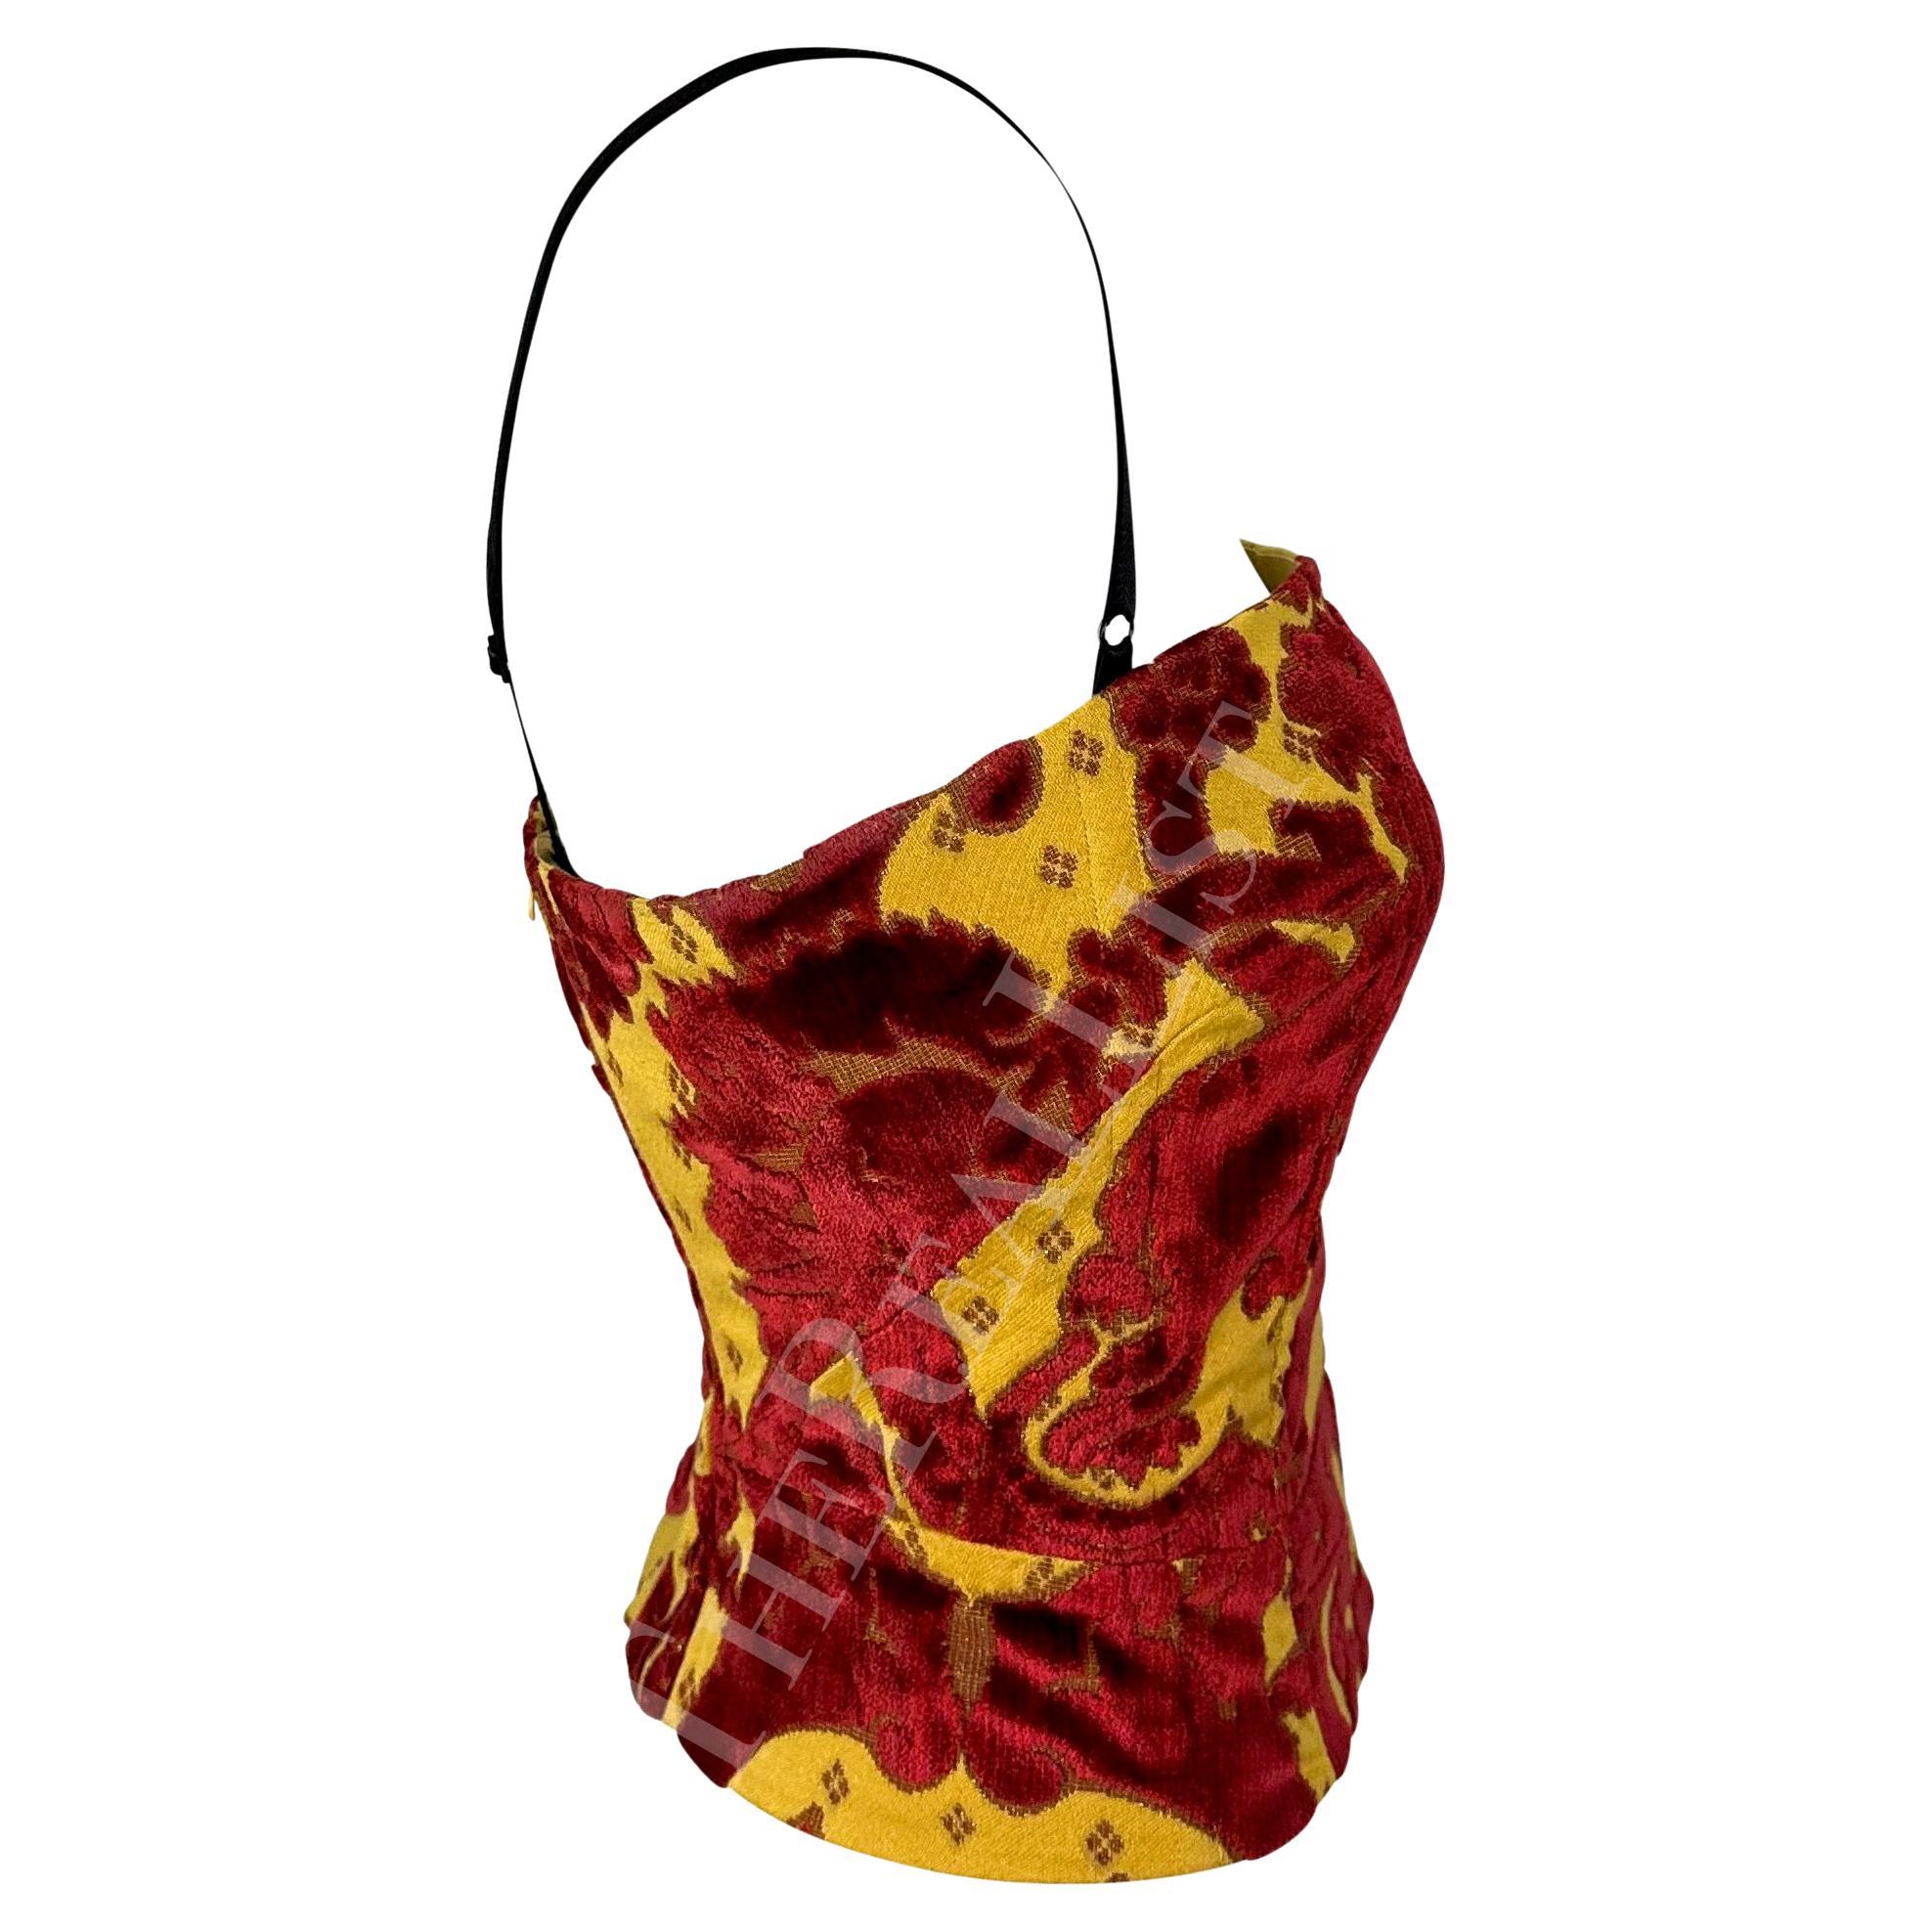 S/S 2000 Dolce & Gabbana Runway Ad Red Gold Velvet Tapestry Corset Bustier For Sale 4